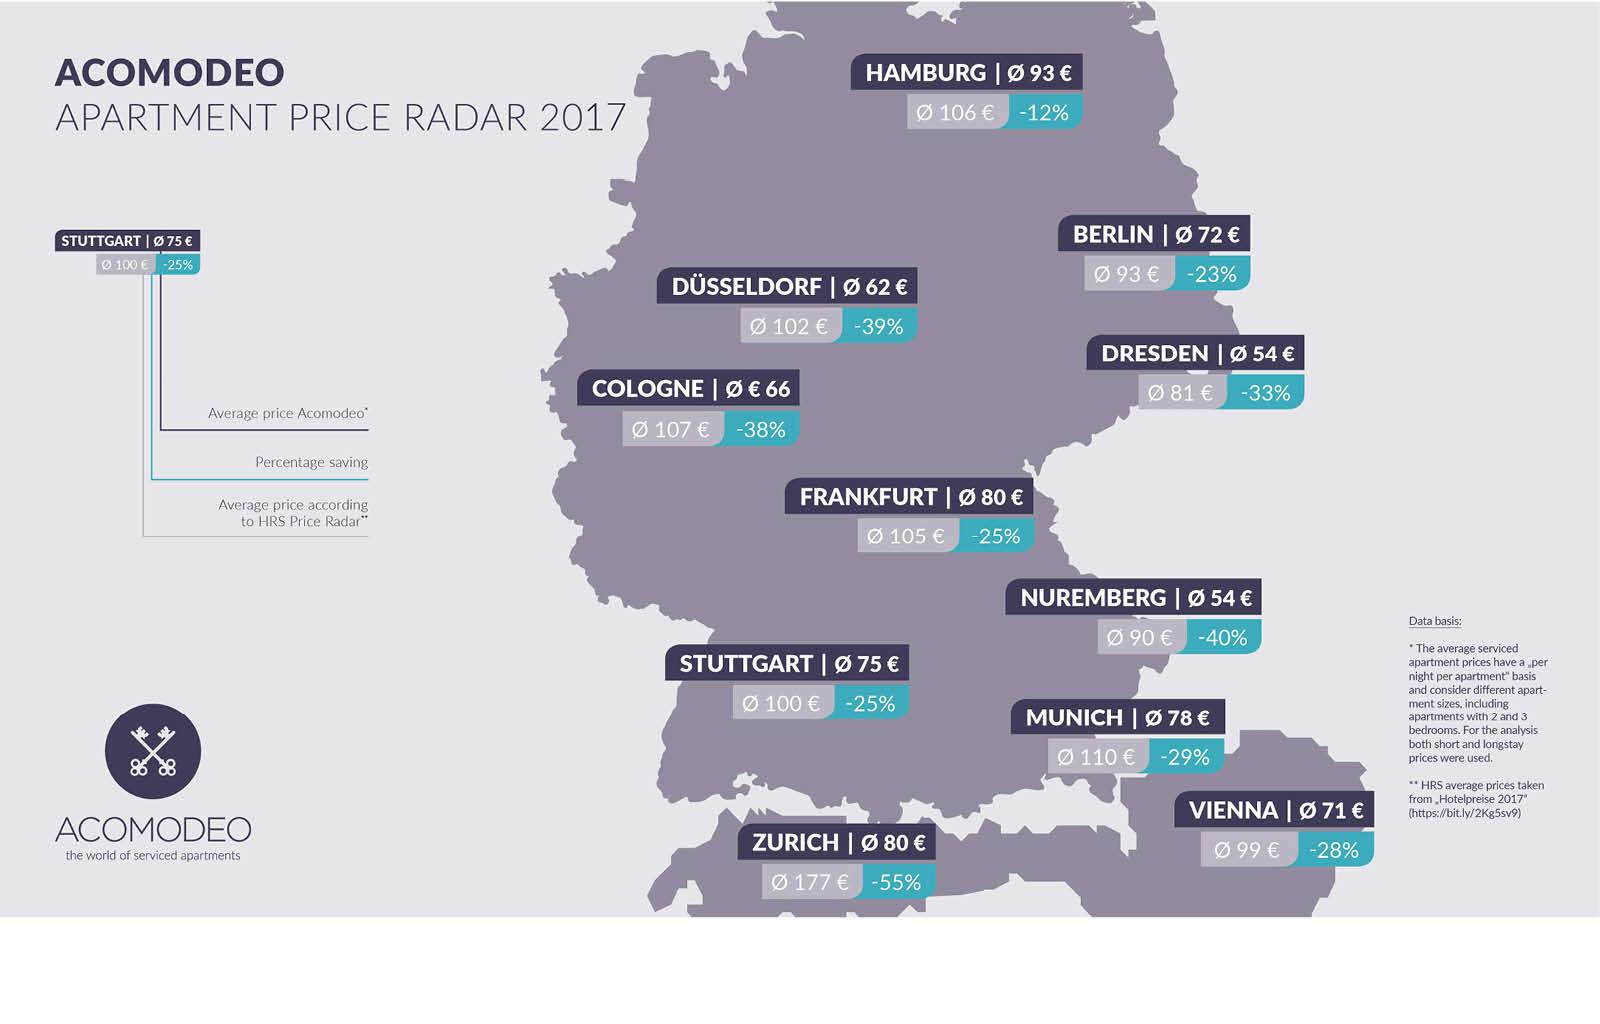 Acomodeo Presents New Apartment Price Radar